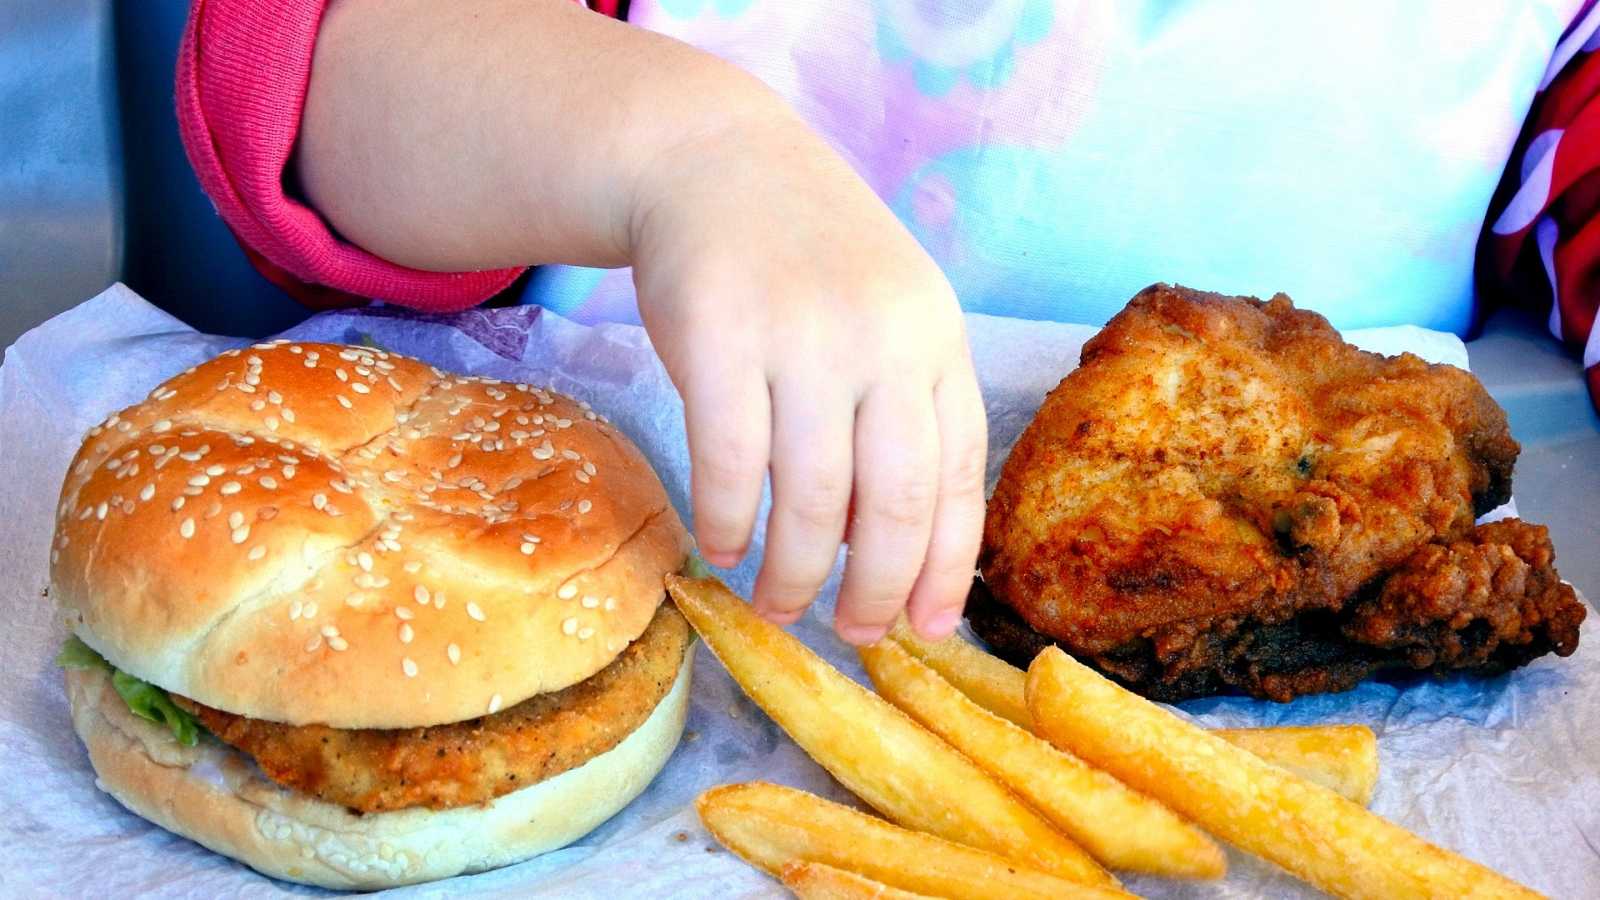 comida-chatarra-obesidad-infantil